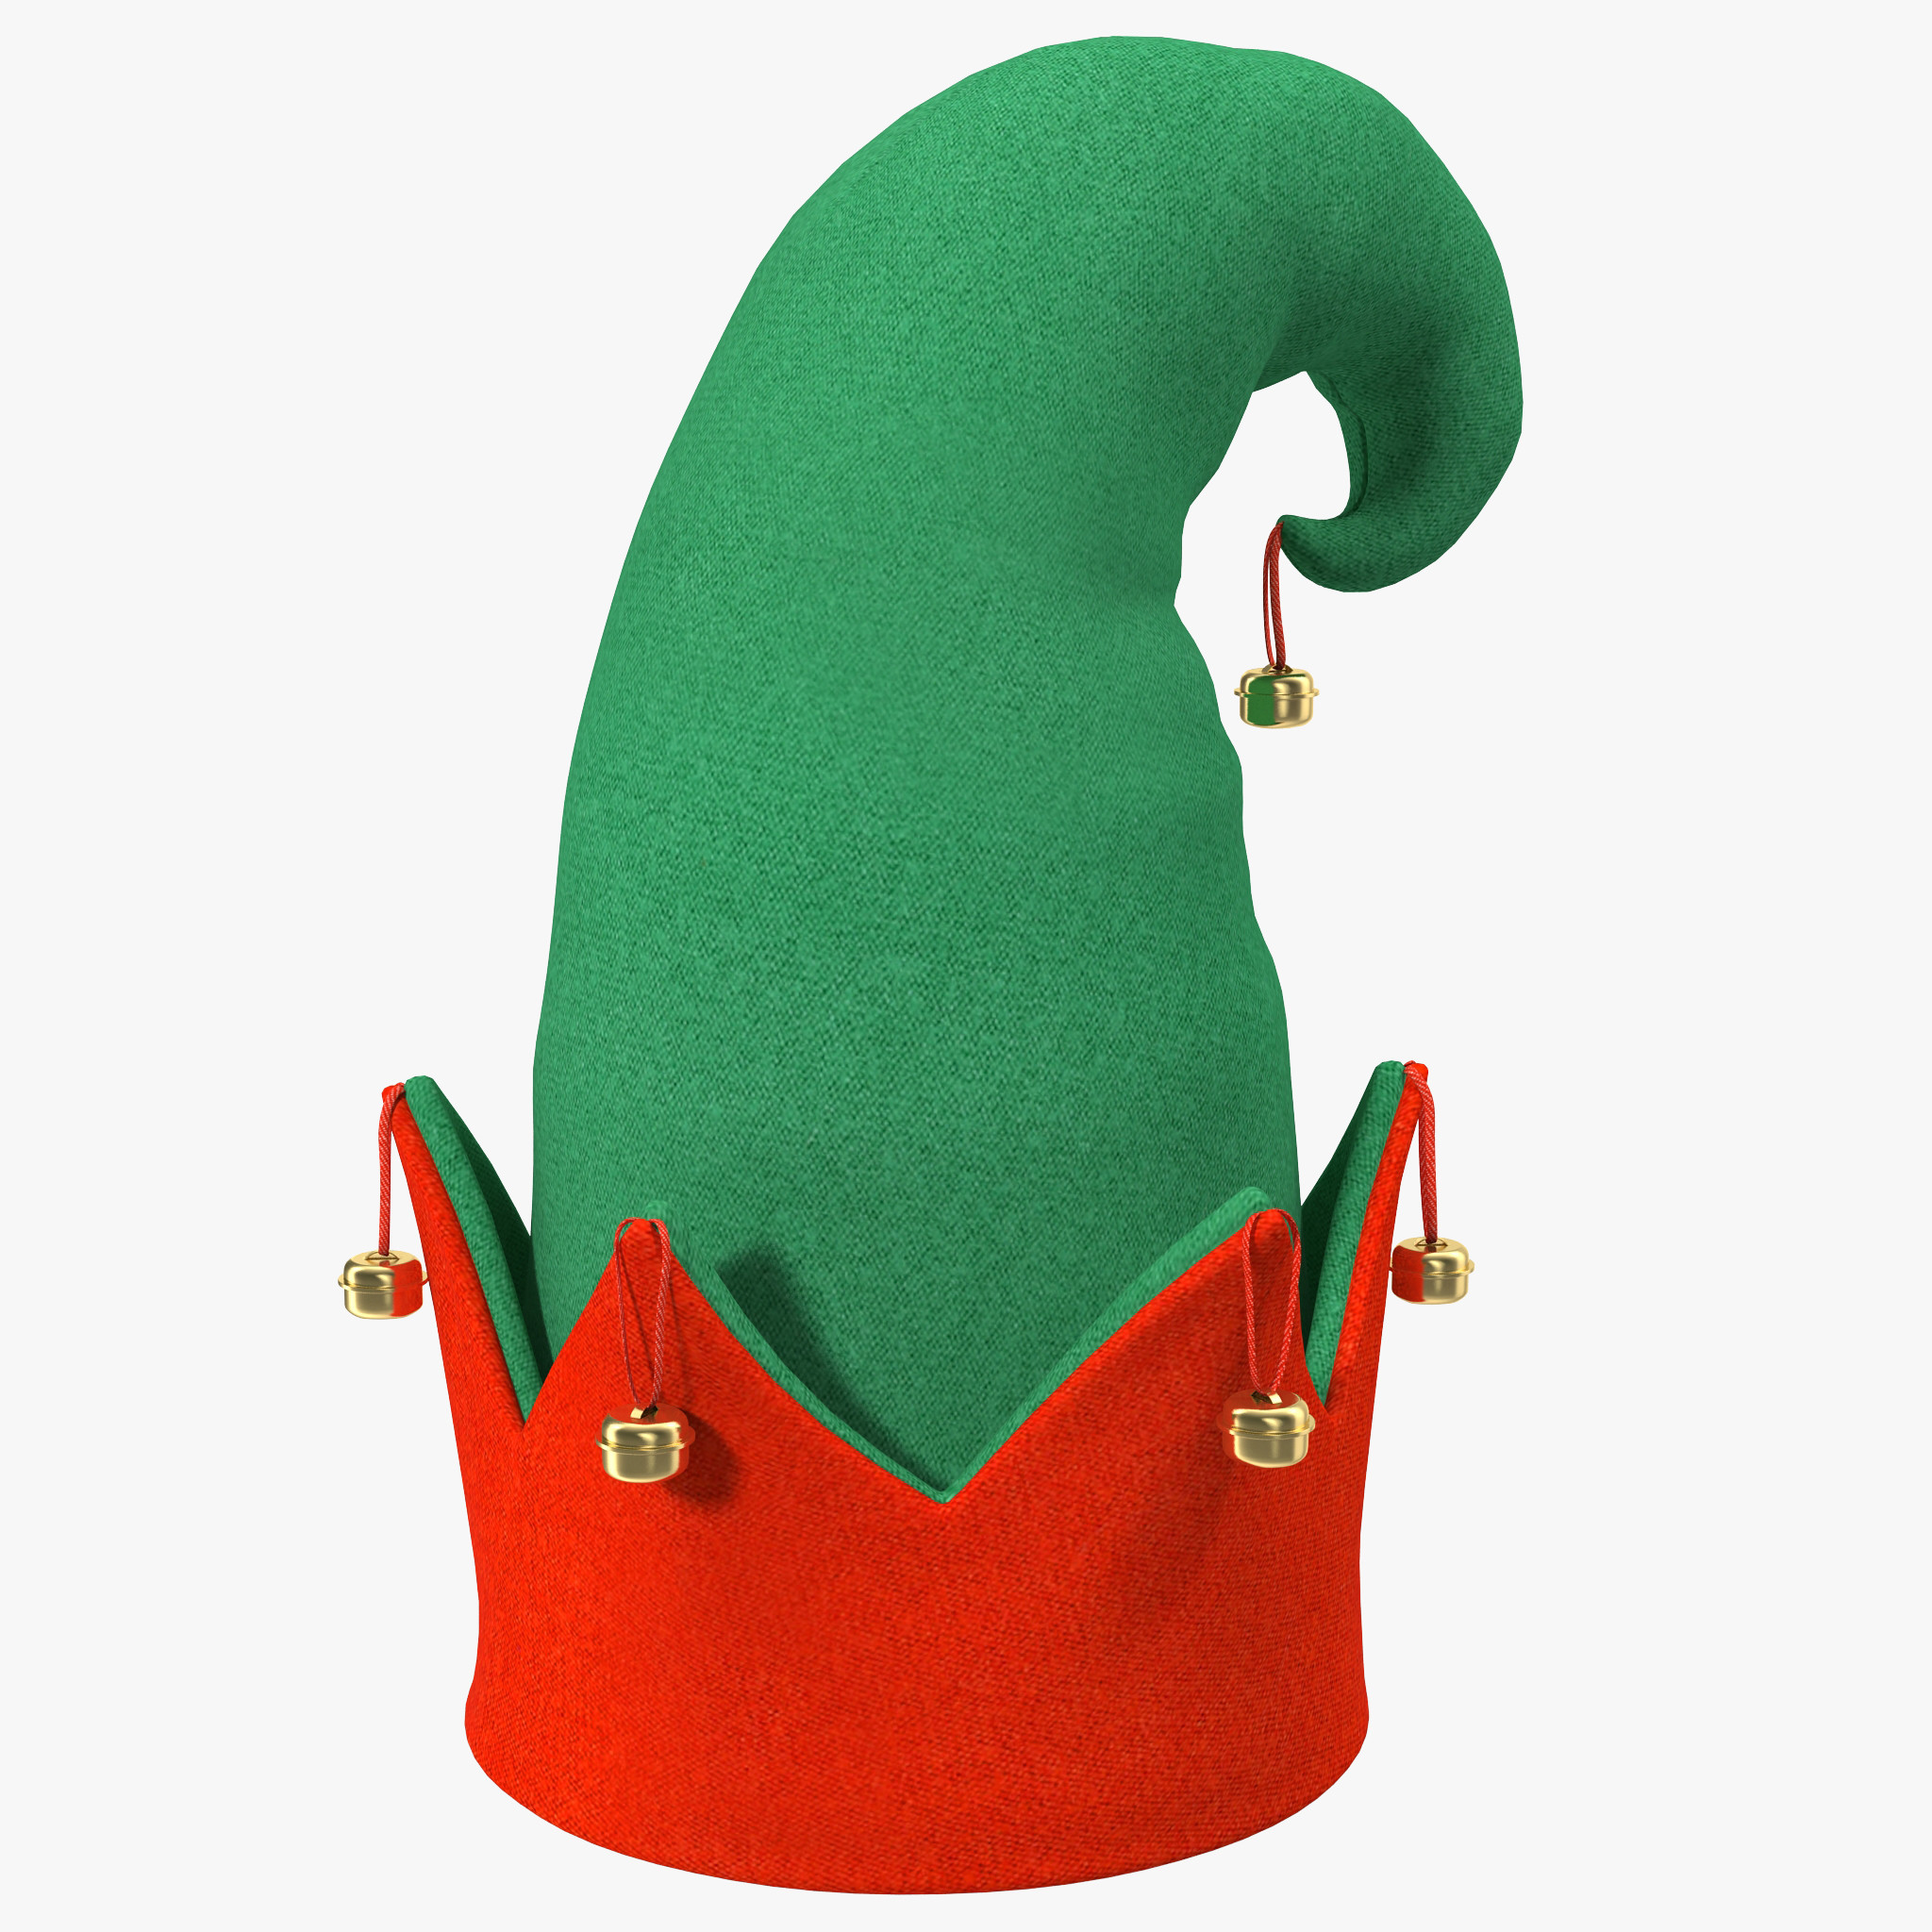 Cartoon Elf Hat   Search Results   Calendar 2015